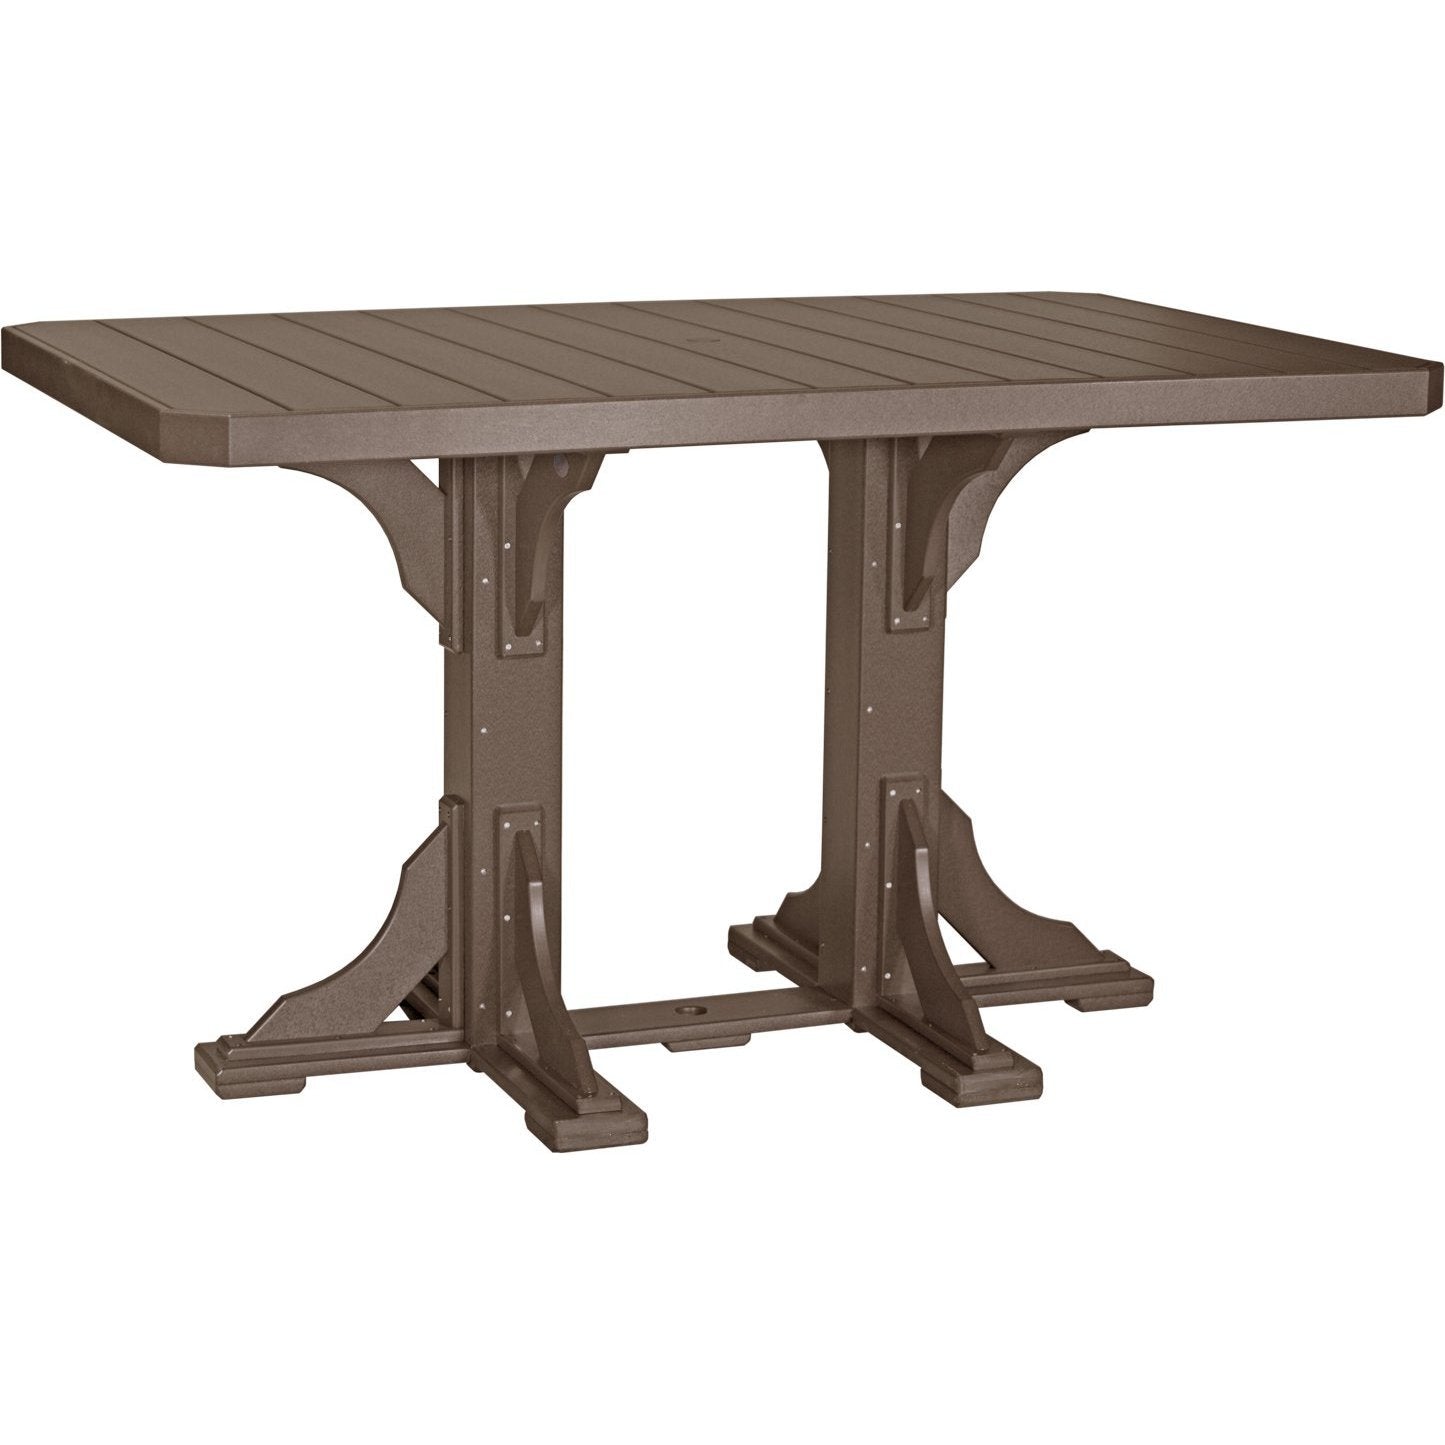 Outdoor 4' x 6' Rectangular Table